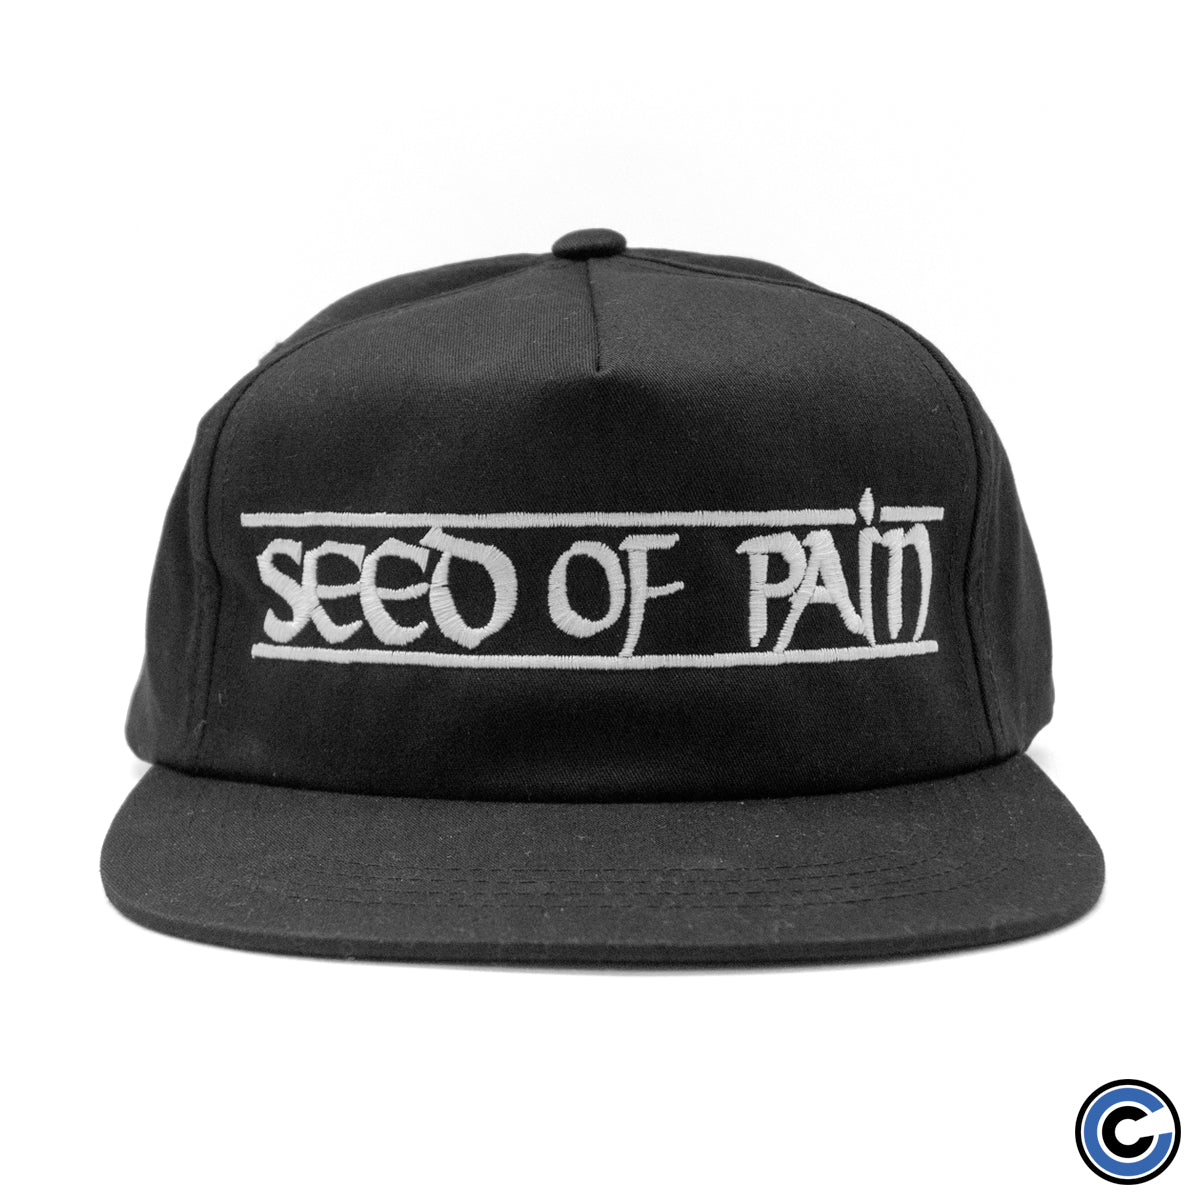 Seed of Pain "Logo" Snapback